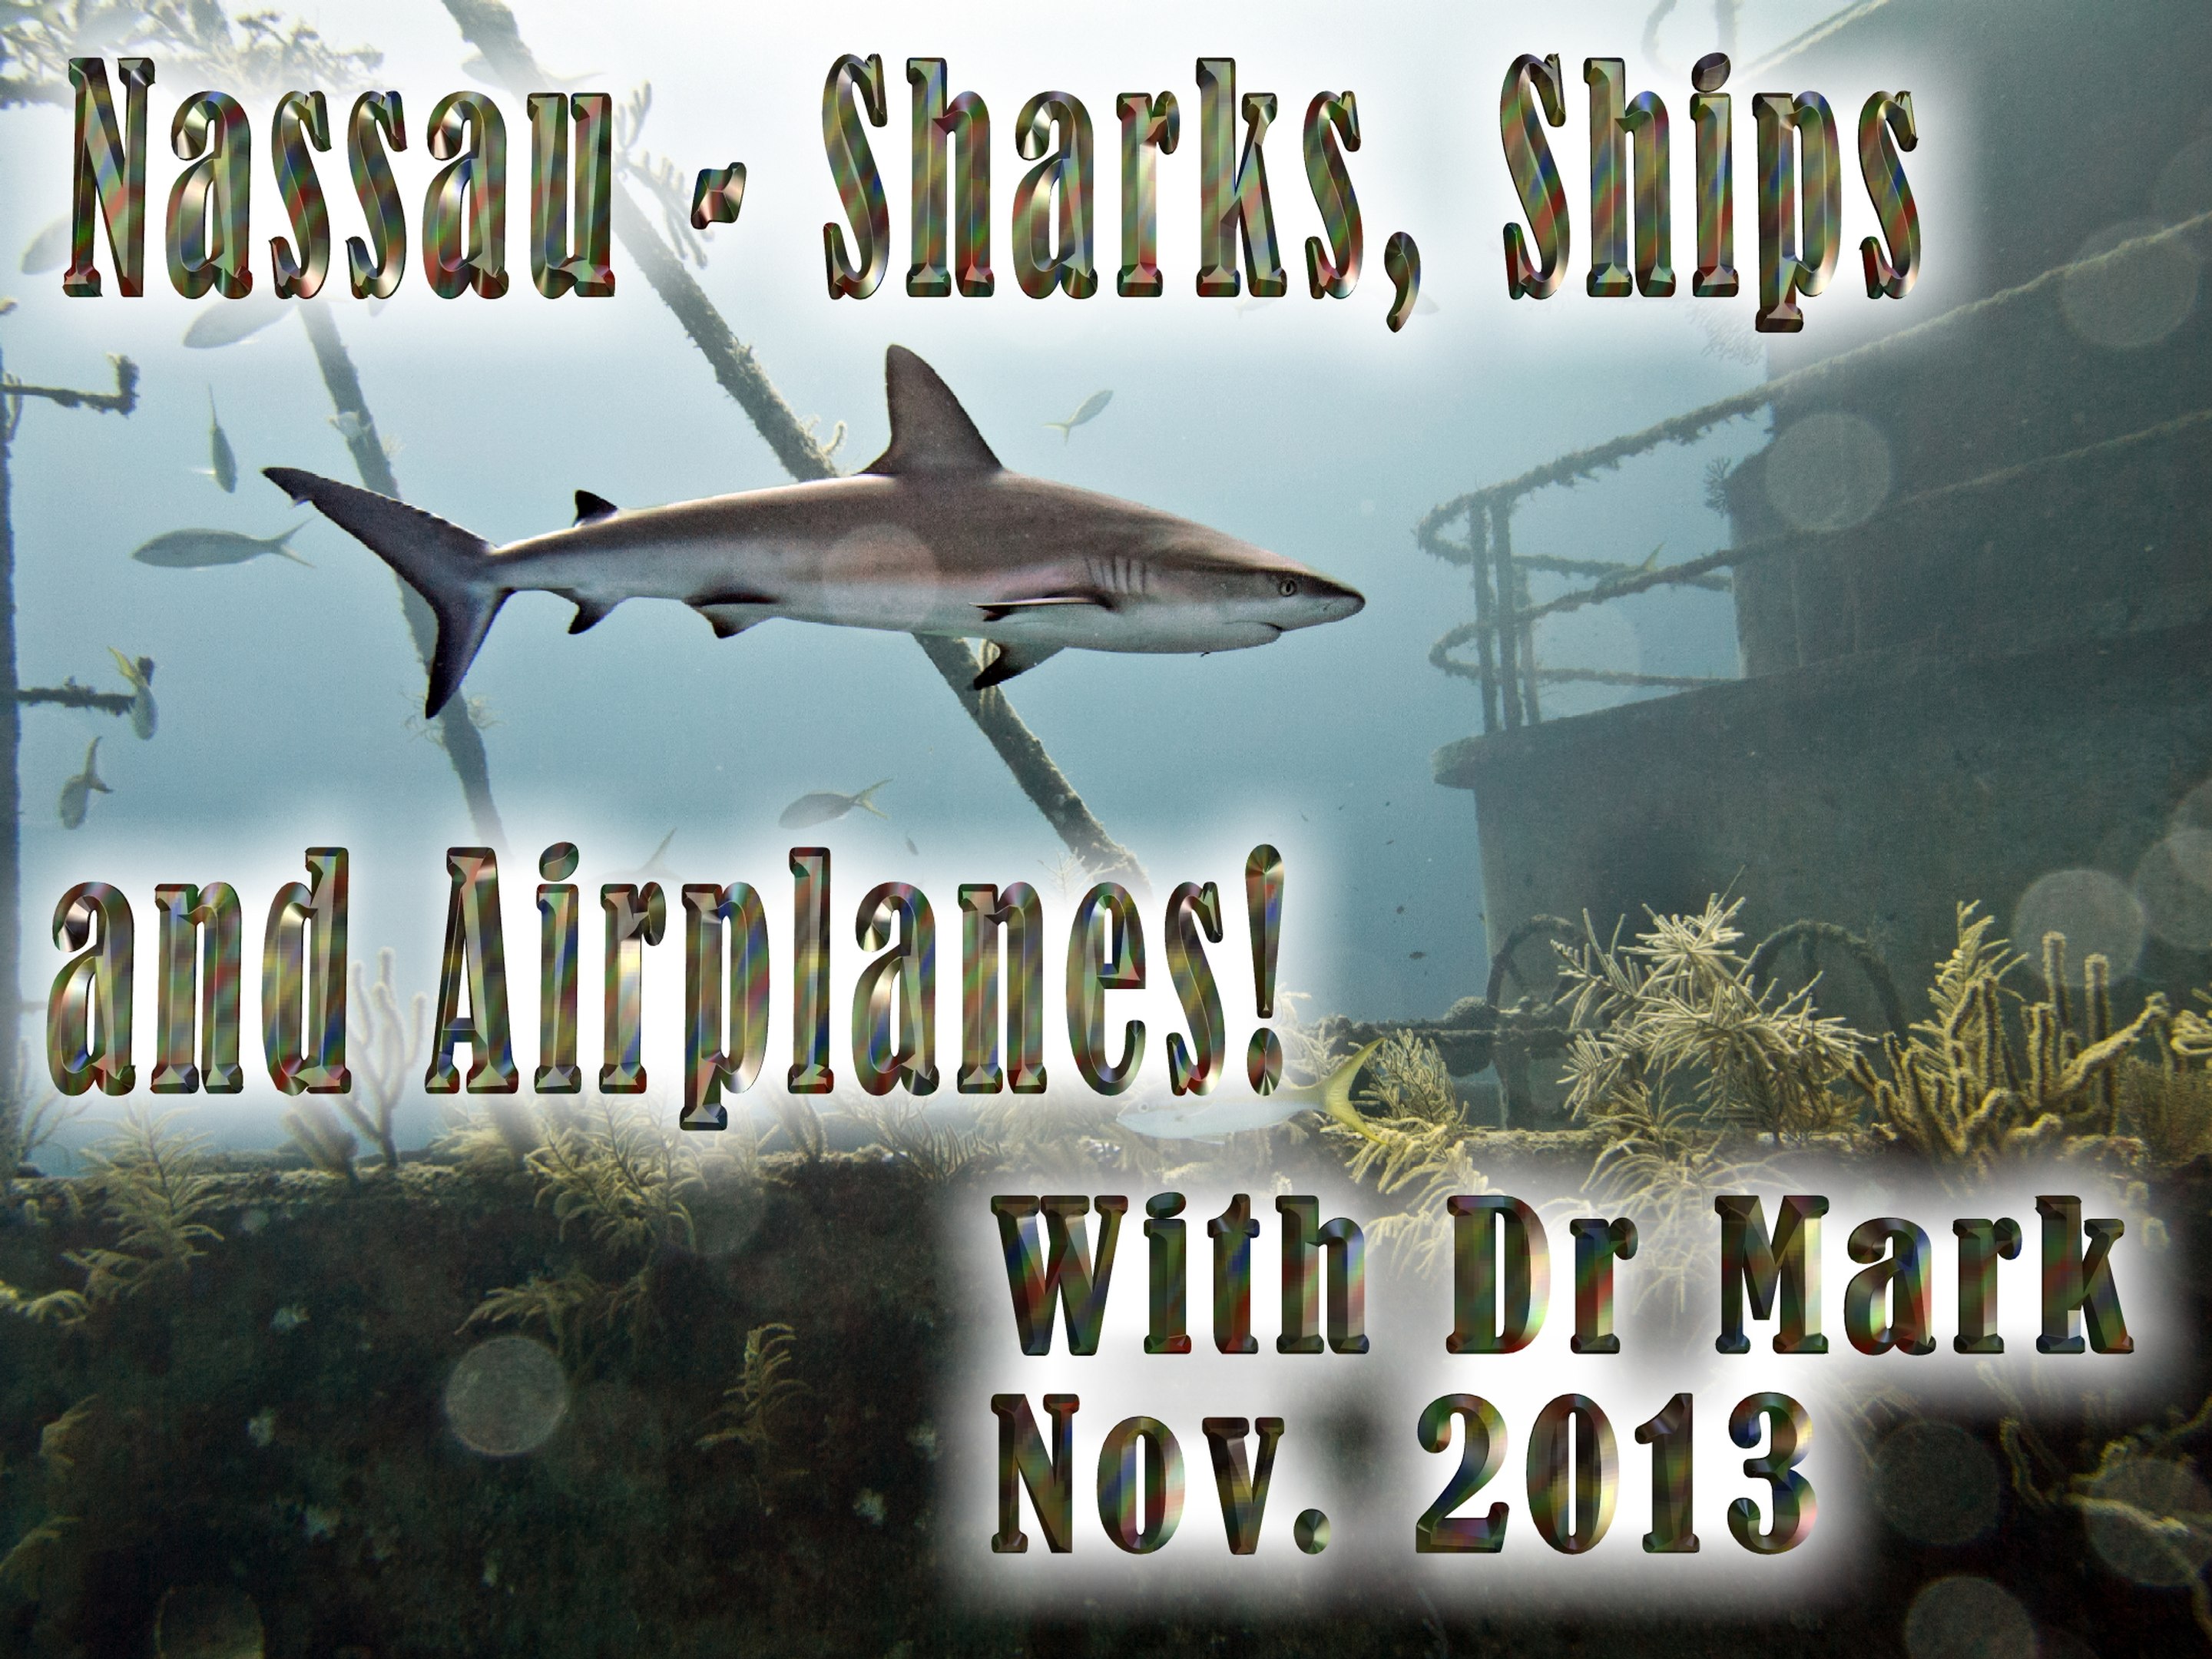 Nassau Bahamas
                Sharks Ships and Planes 11-6-13